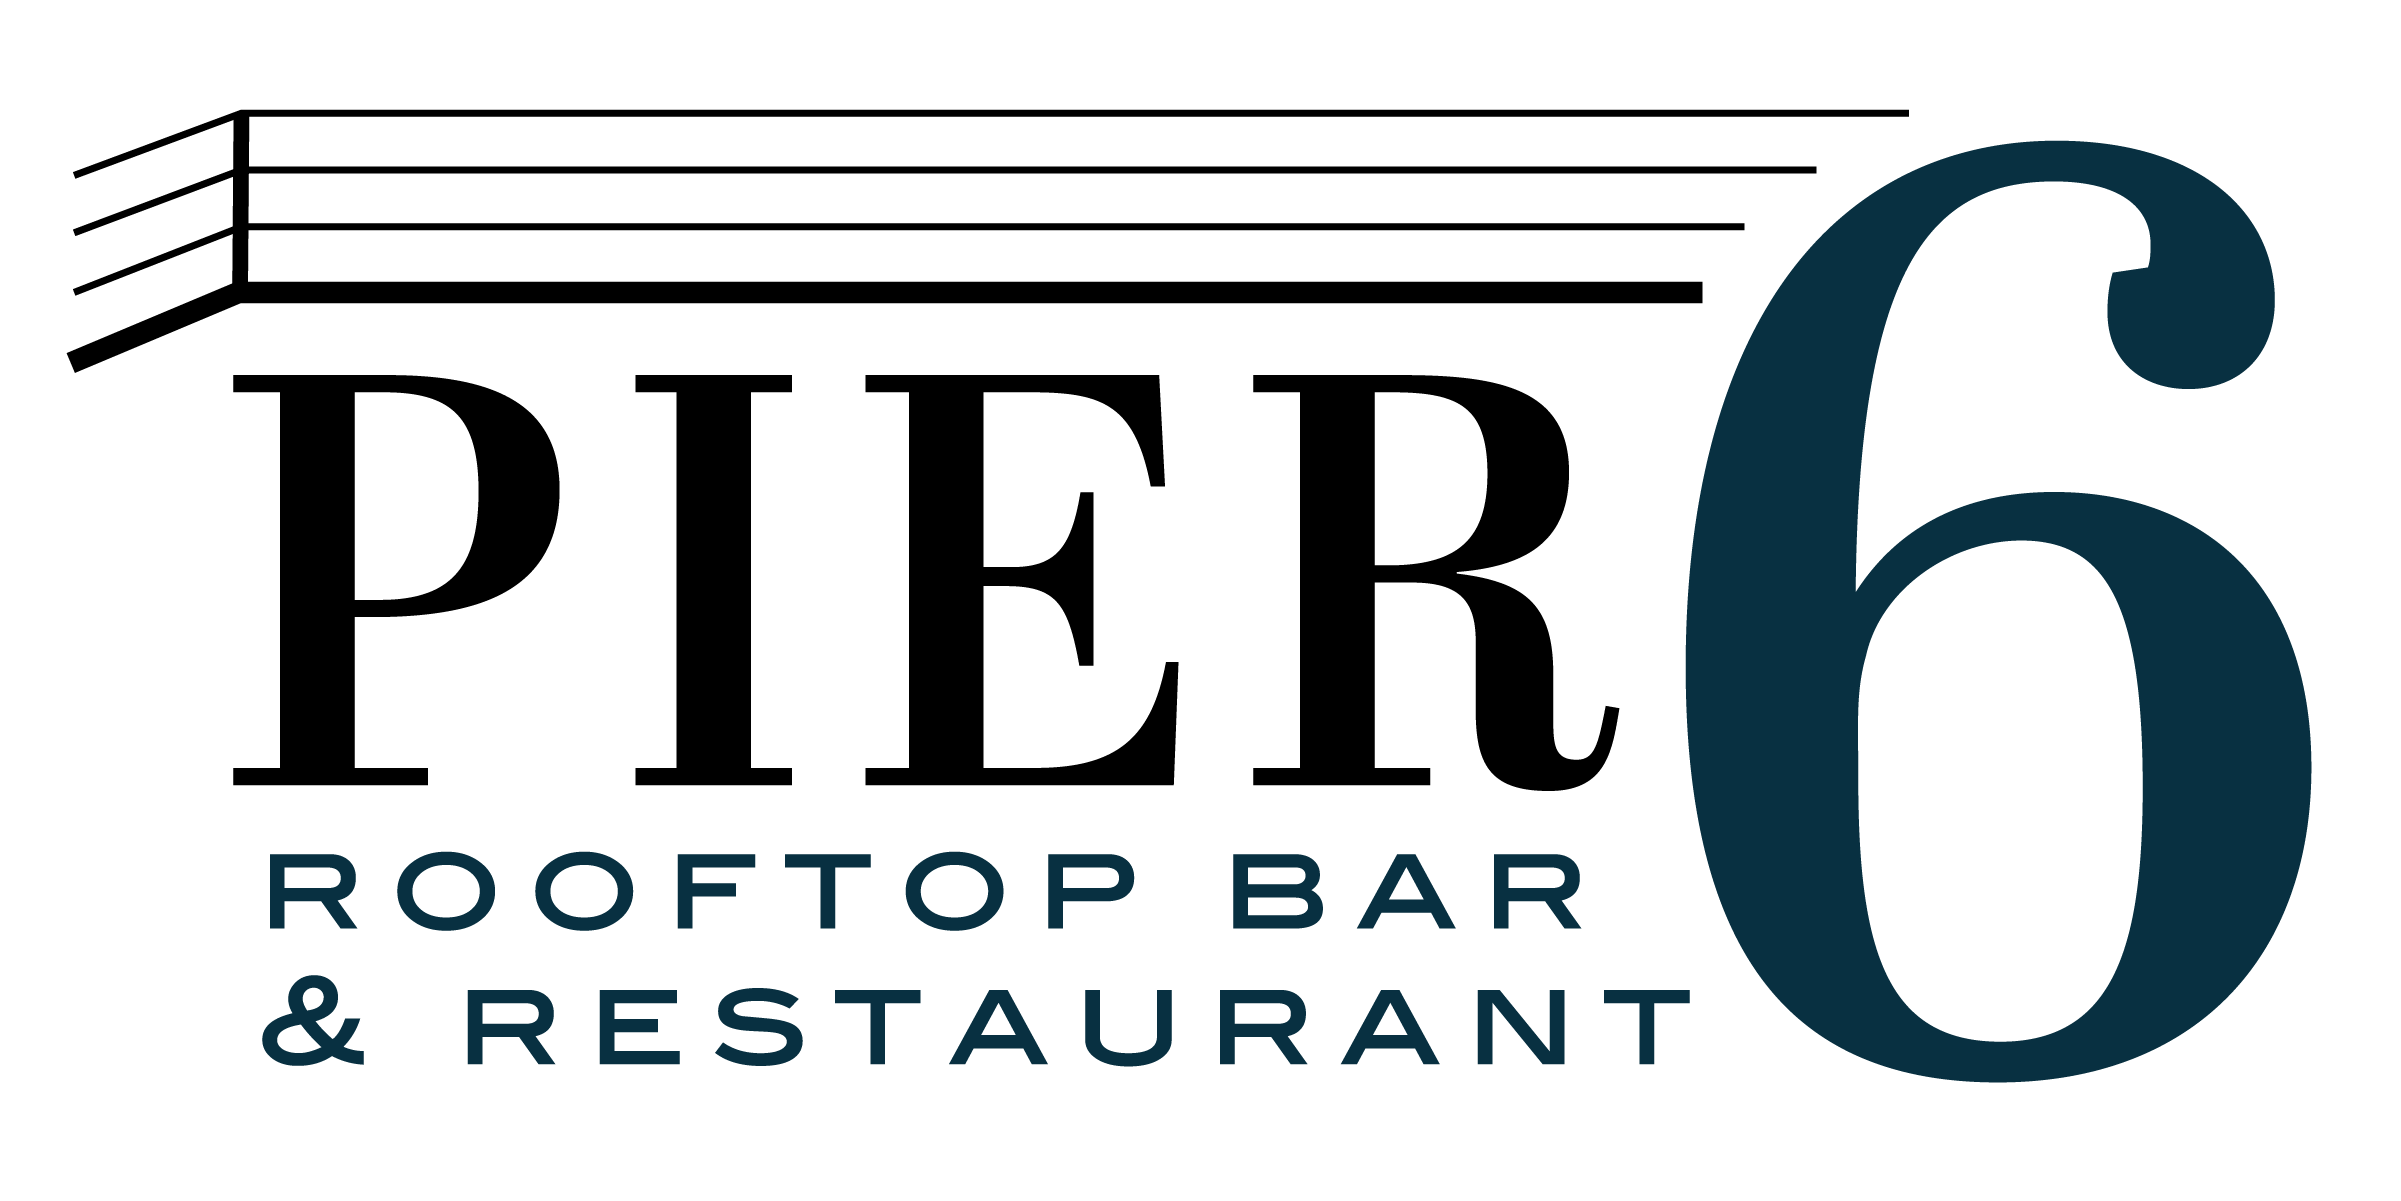 Pier 6 Rooftop Bar Restaurant logo hr